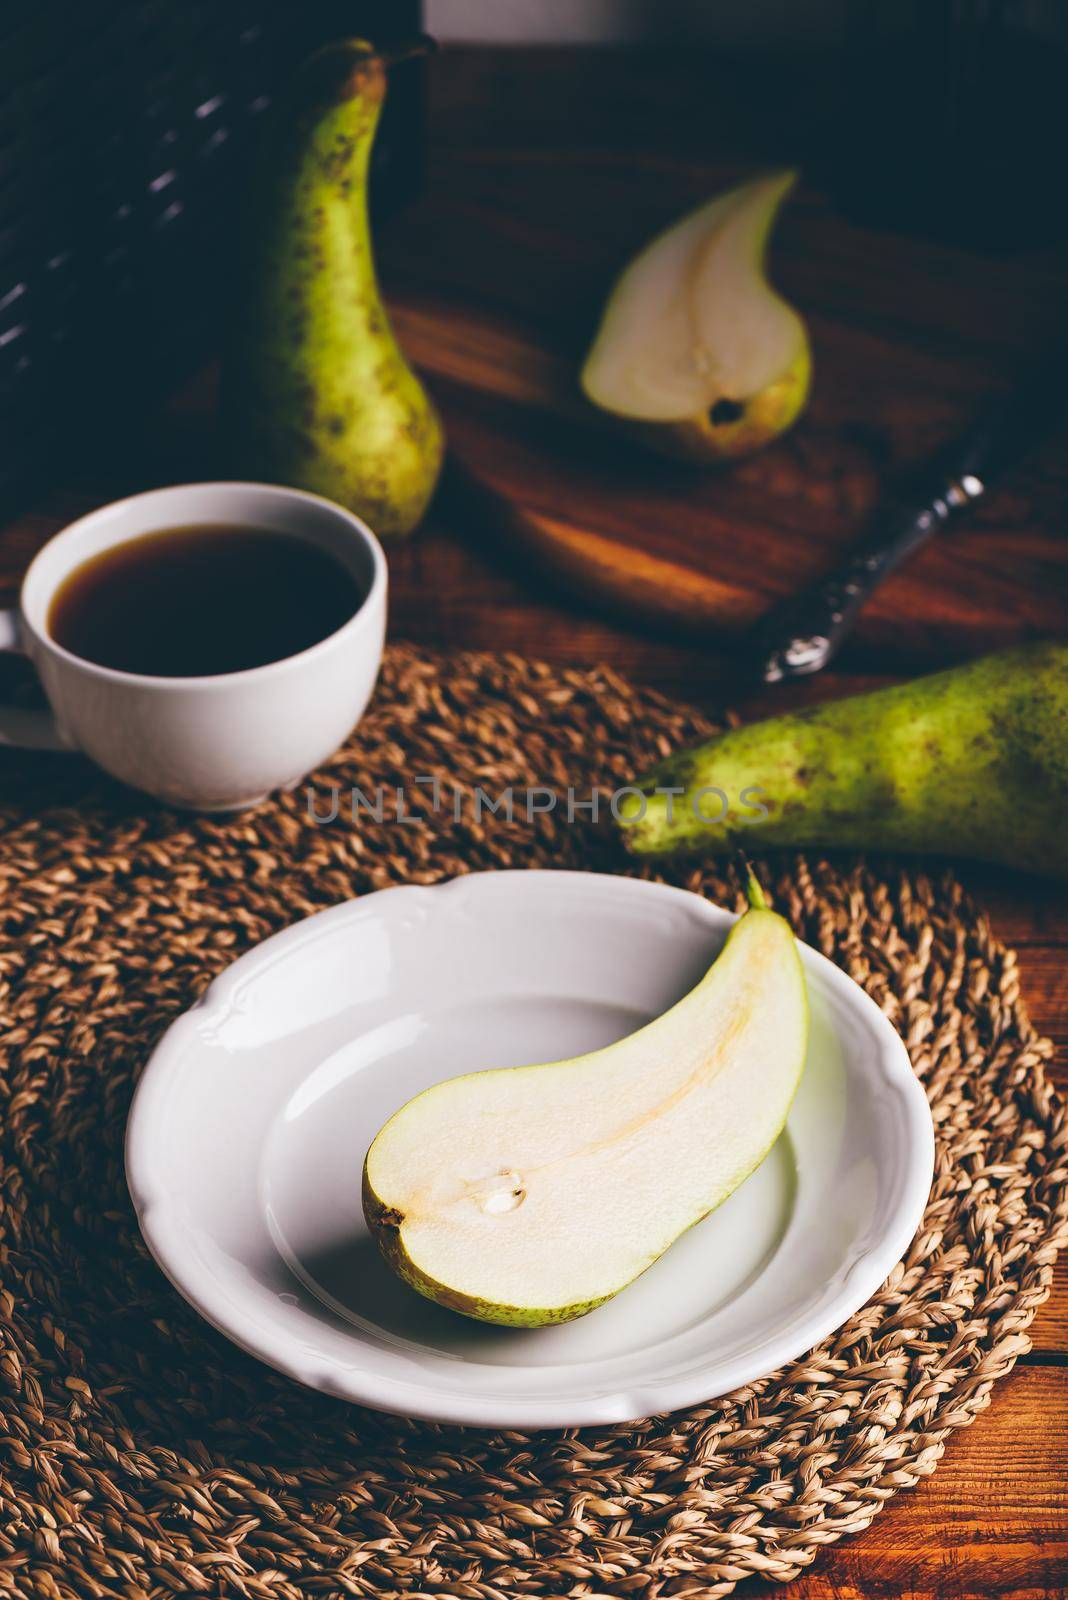 Half of Green Pear on White Plate by Seva_blsv